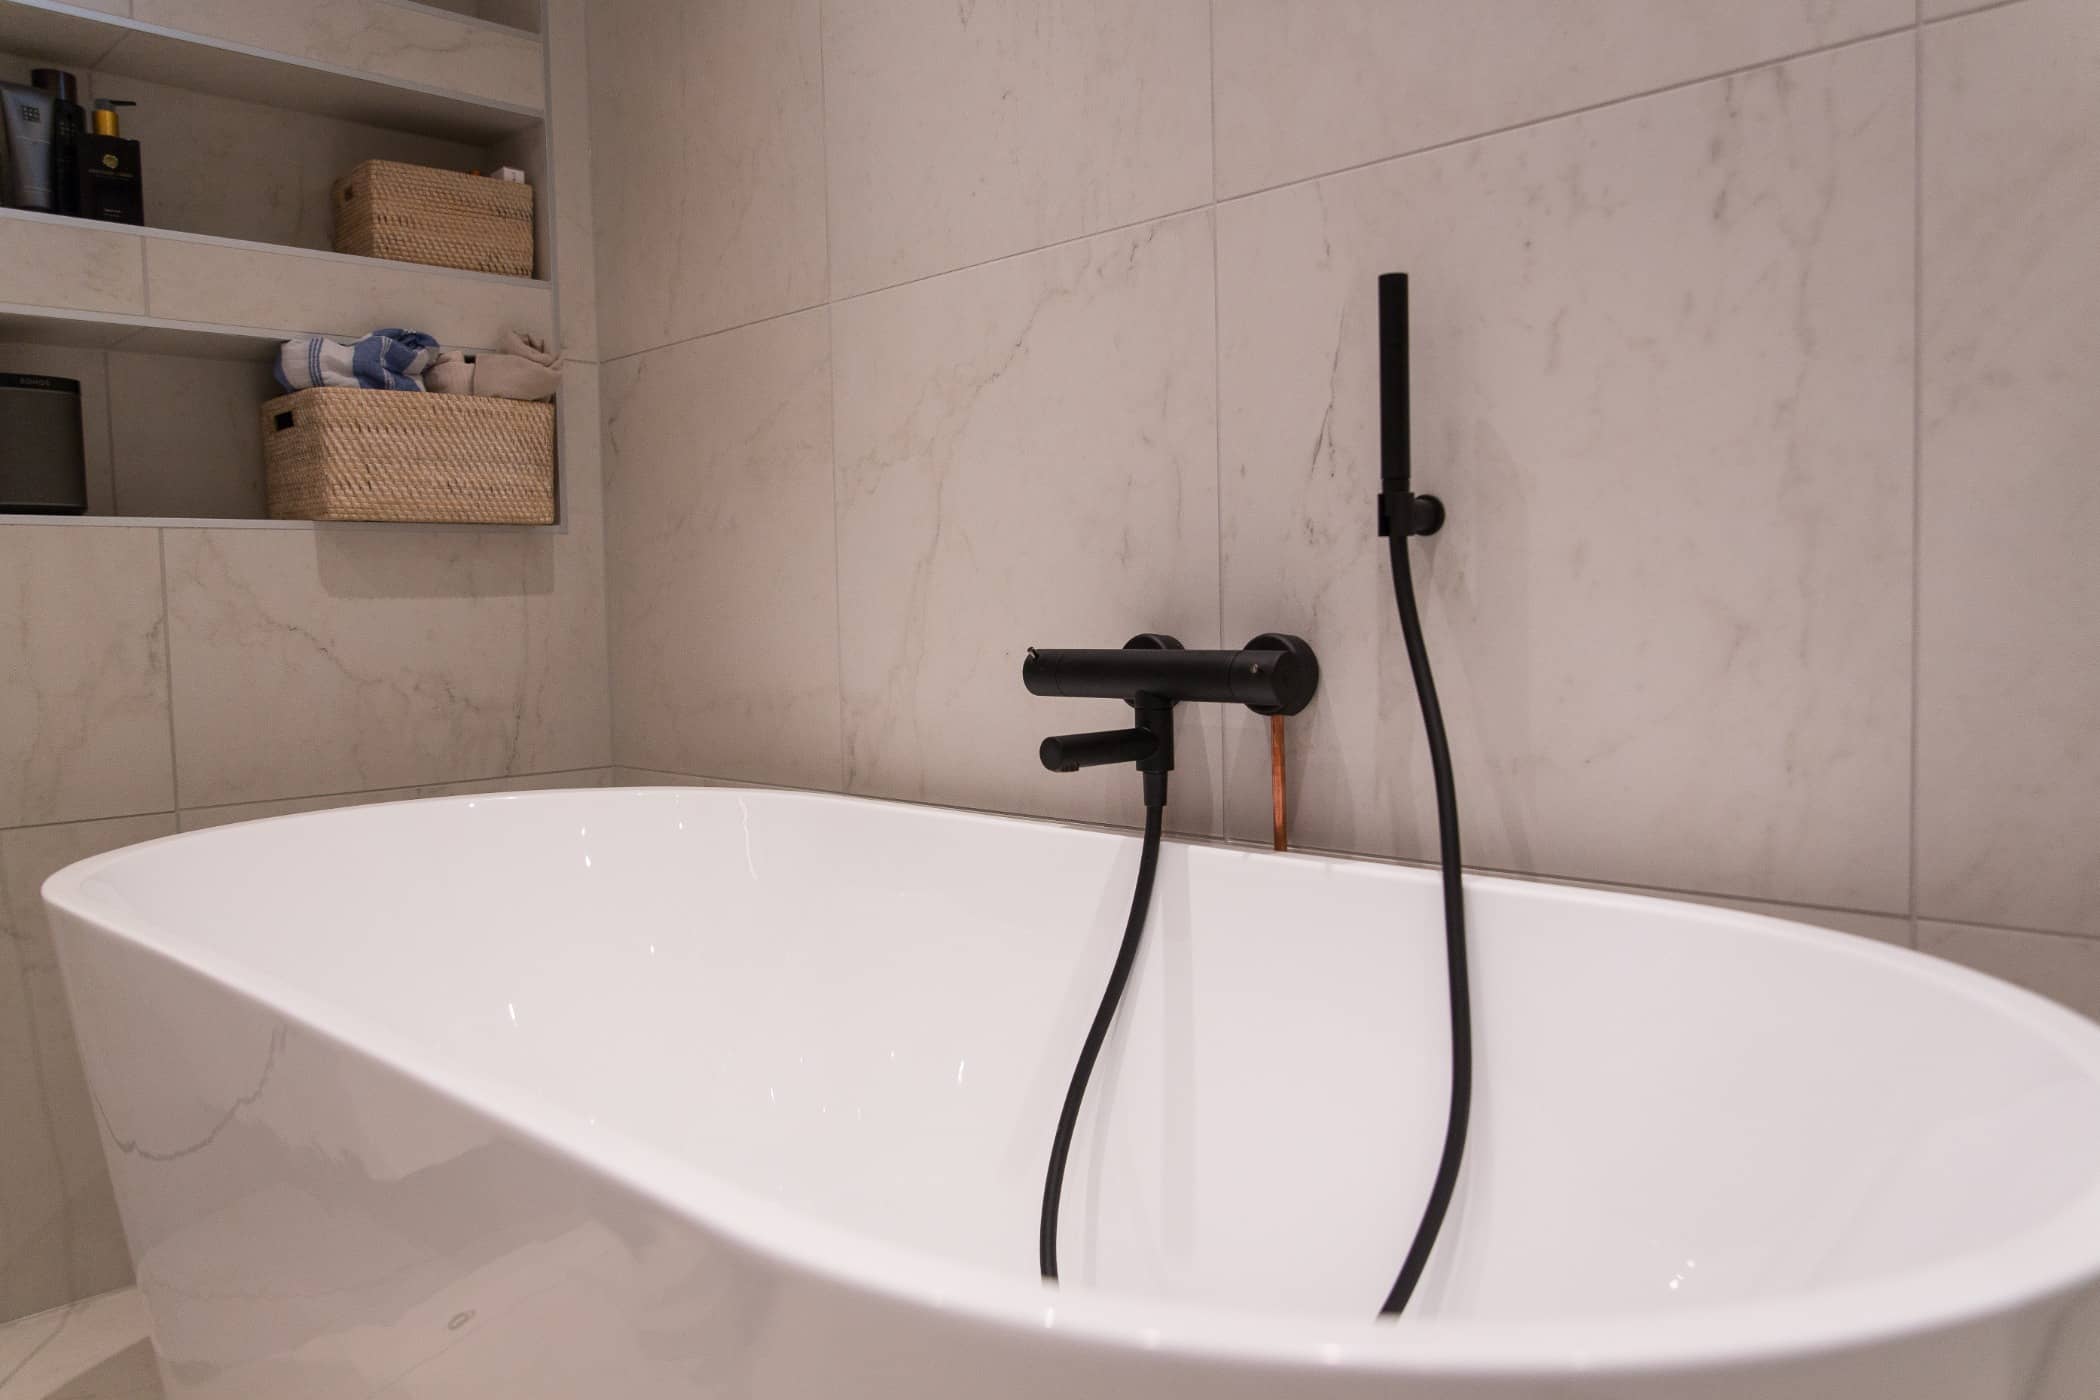 Plumbing fixture, Bathroom sink, Room, Tile, Wall, Property, Tap